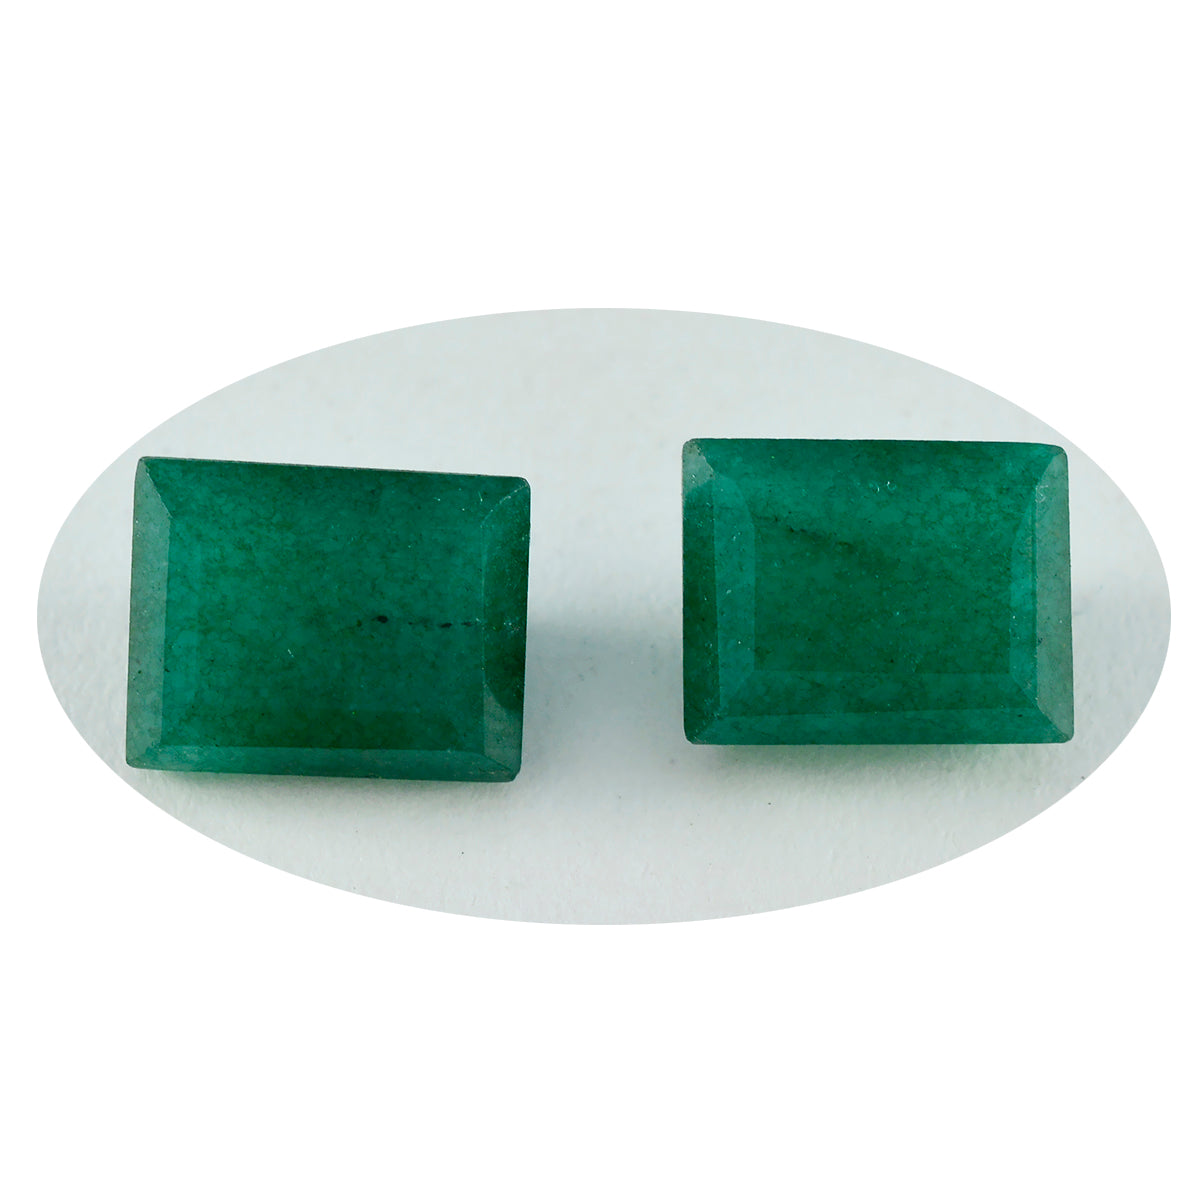 Riyogems 1PC Natural Green Jasper Faceted 12x16 mm Octagon Shape superb Quality Gem